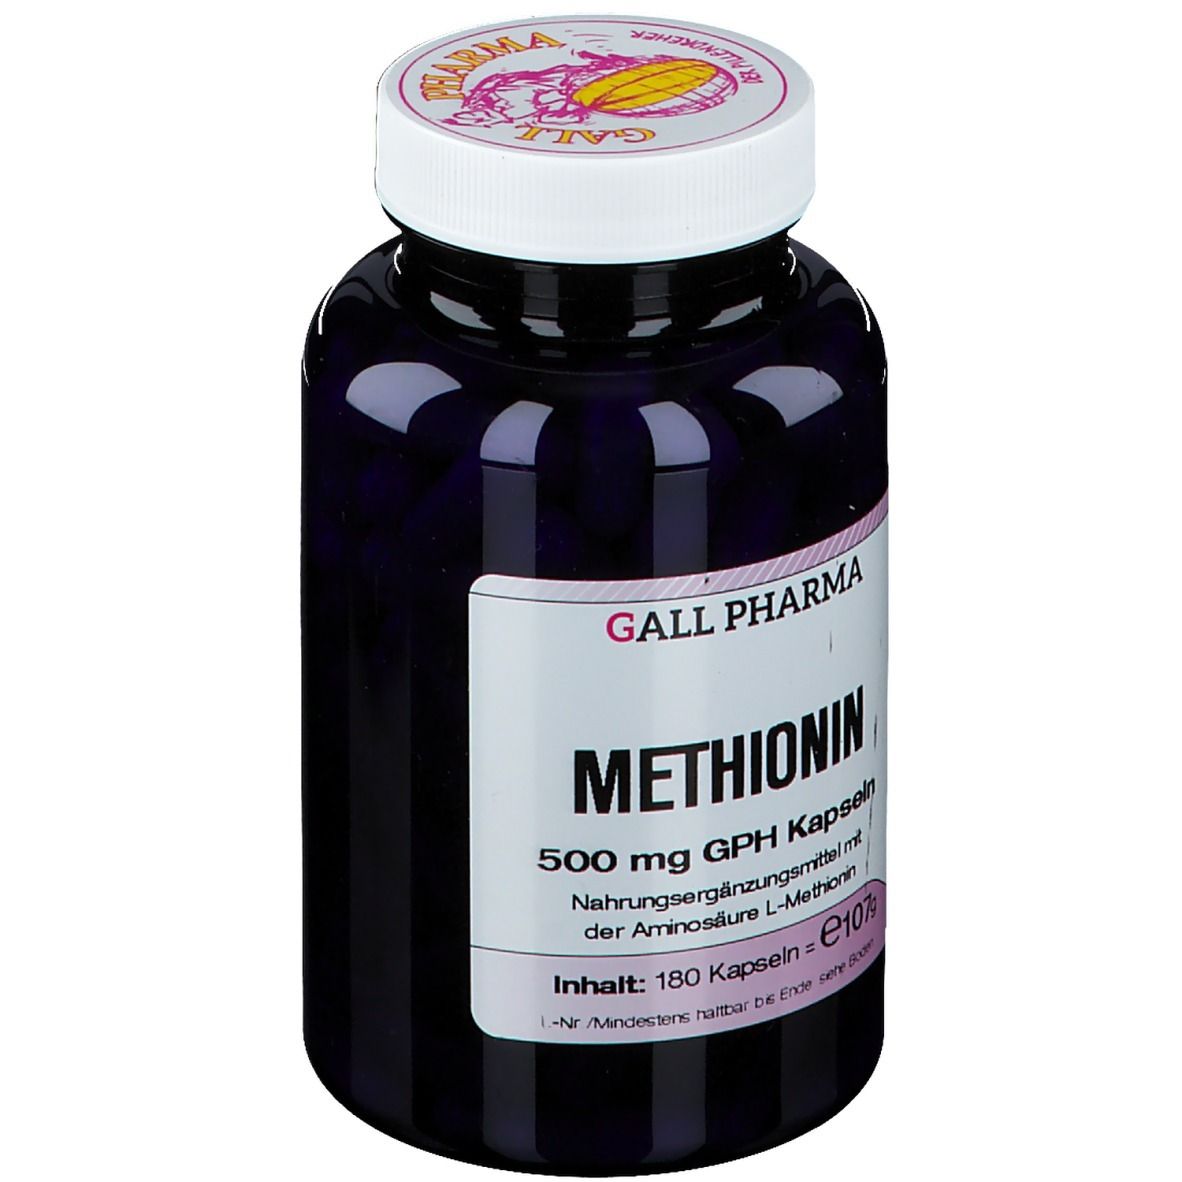 GALL PHARMA L-Methionin 500 mg GPH Kapseln